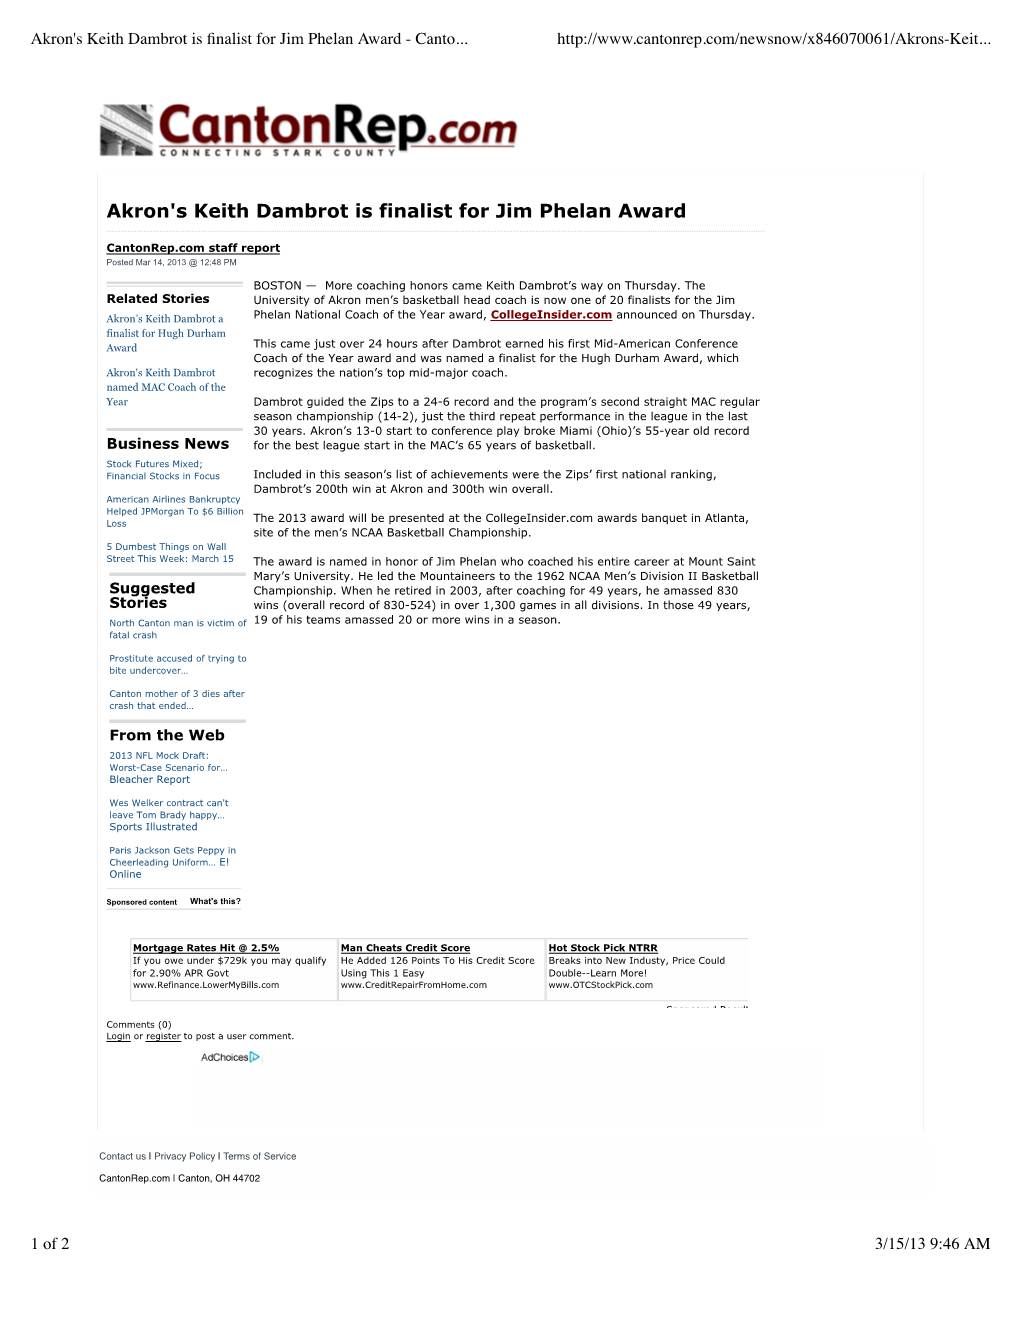 Akron's Keith Dambrot Is Finalist for Jim Phelan Award